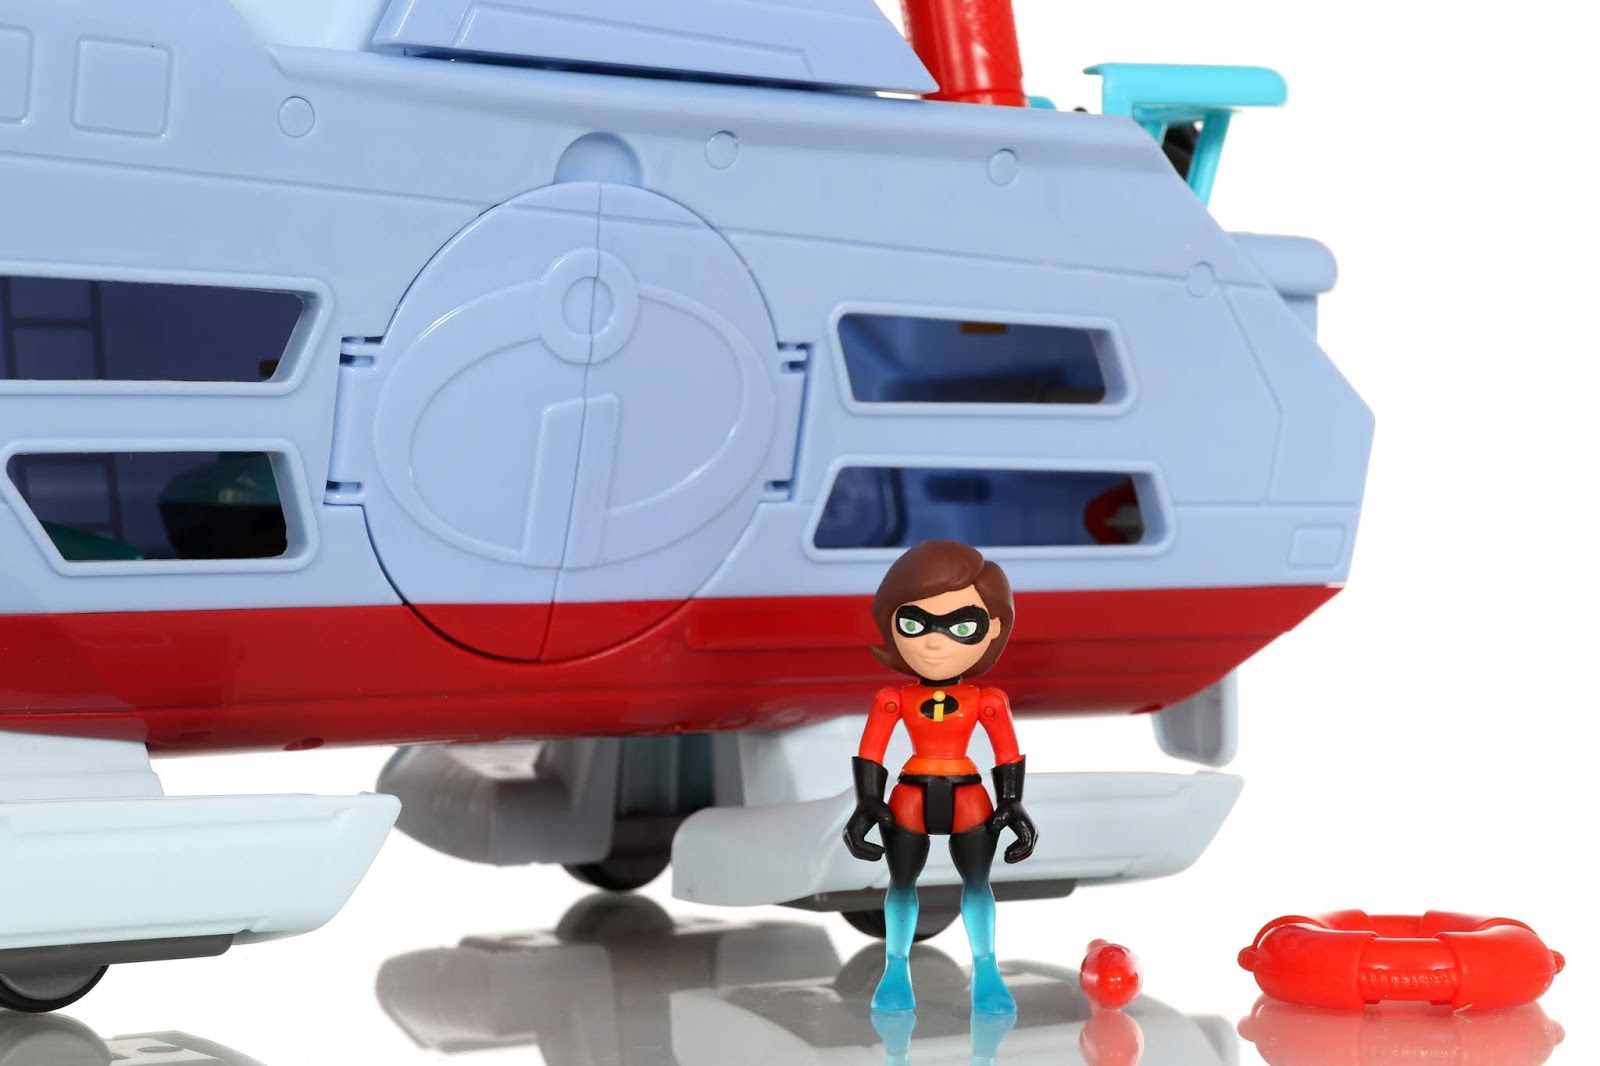  Incredibles 2 "Junior Supers" Hydroliner Playset Jakks Pacific